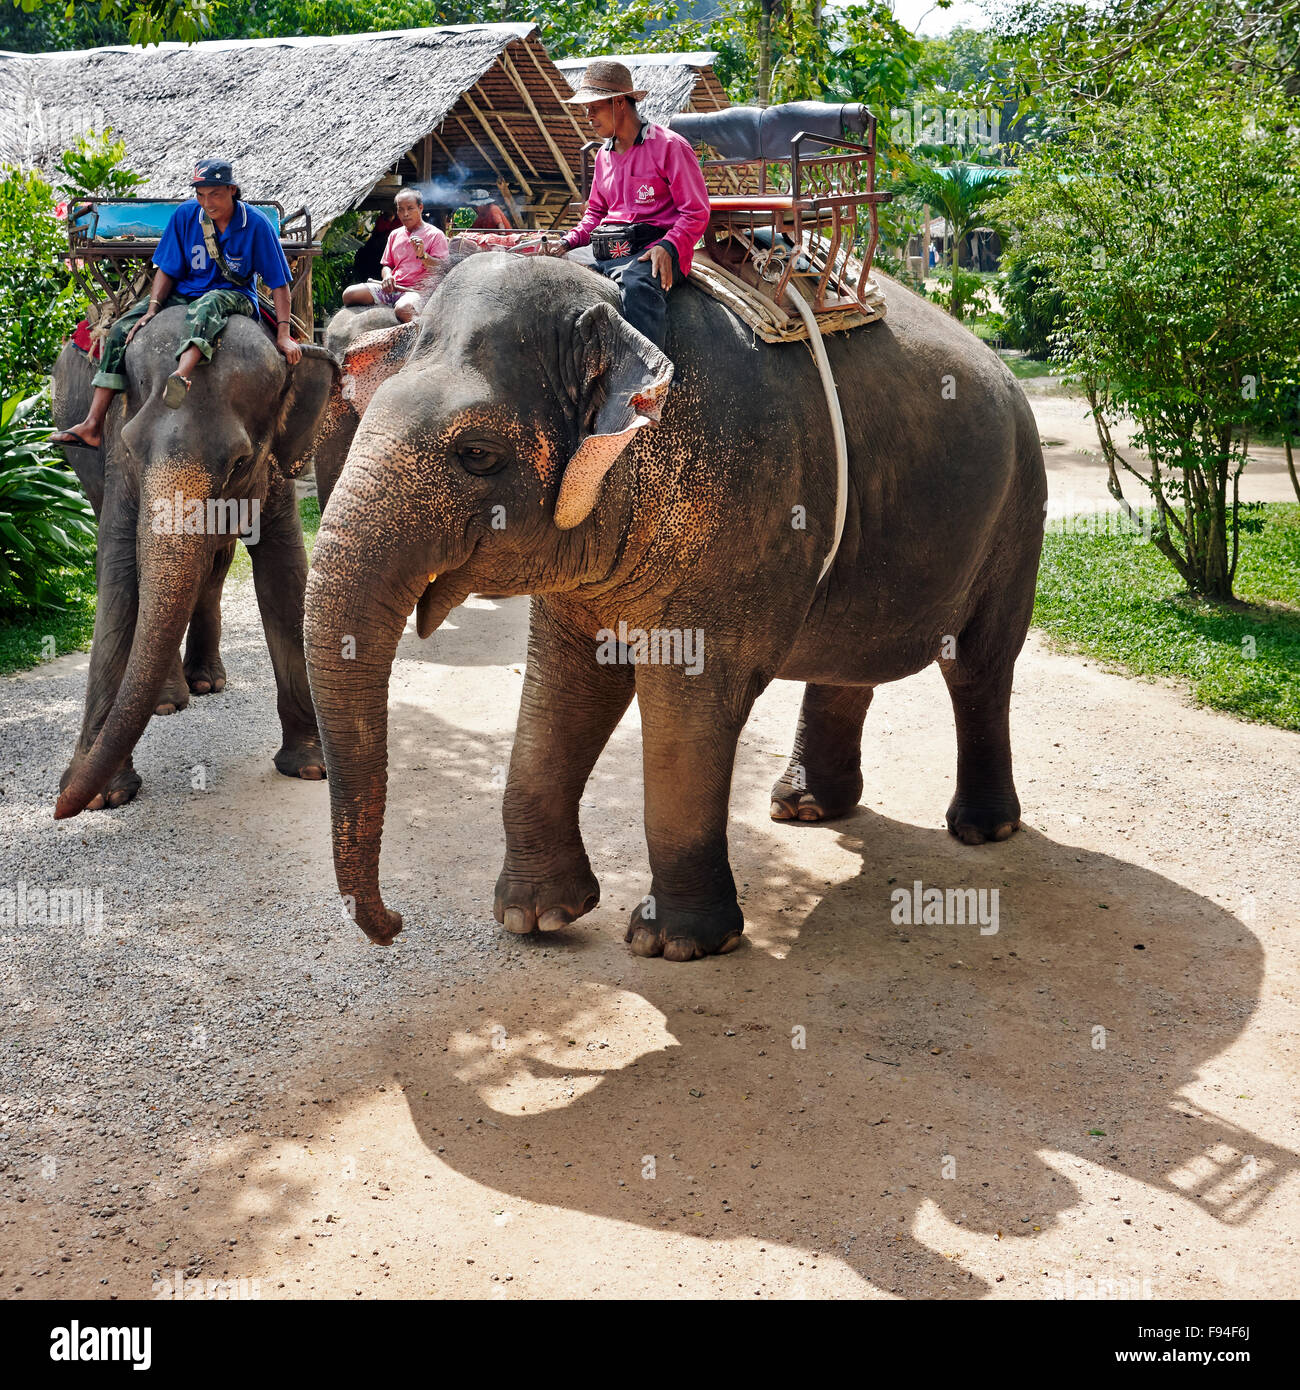 Elephant Camp nei pressi di Ao Nang town. Provincia di Krabi, Thailandia. Foto Stock